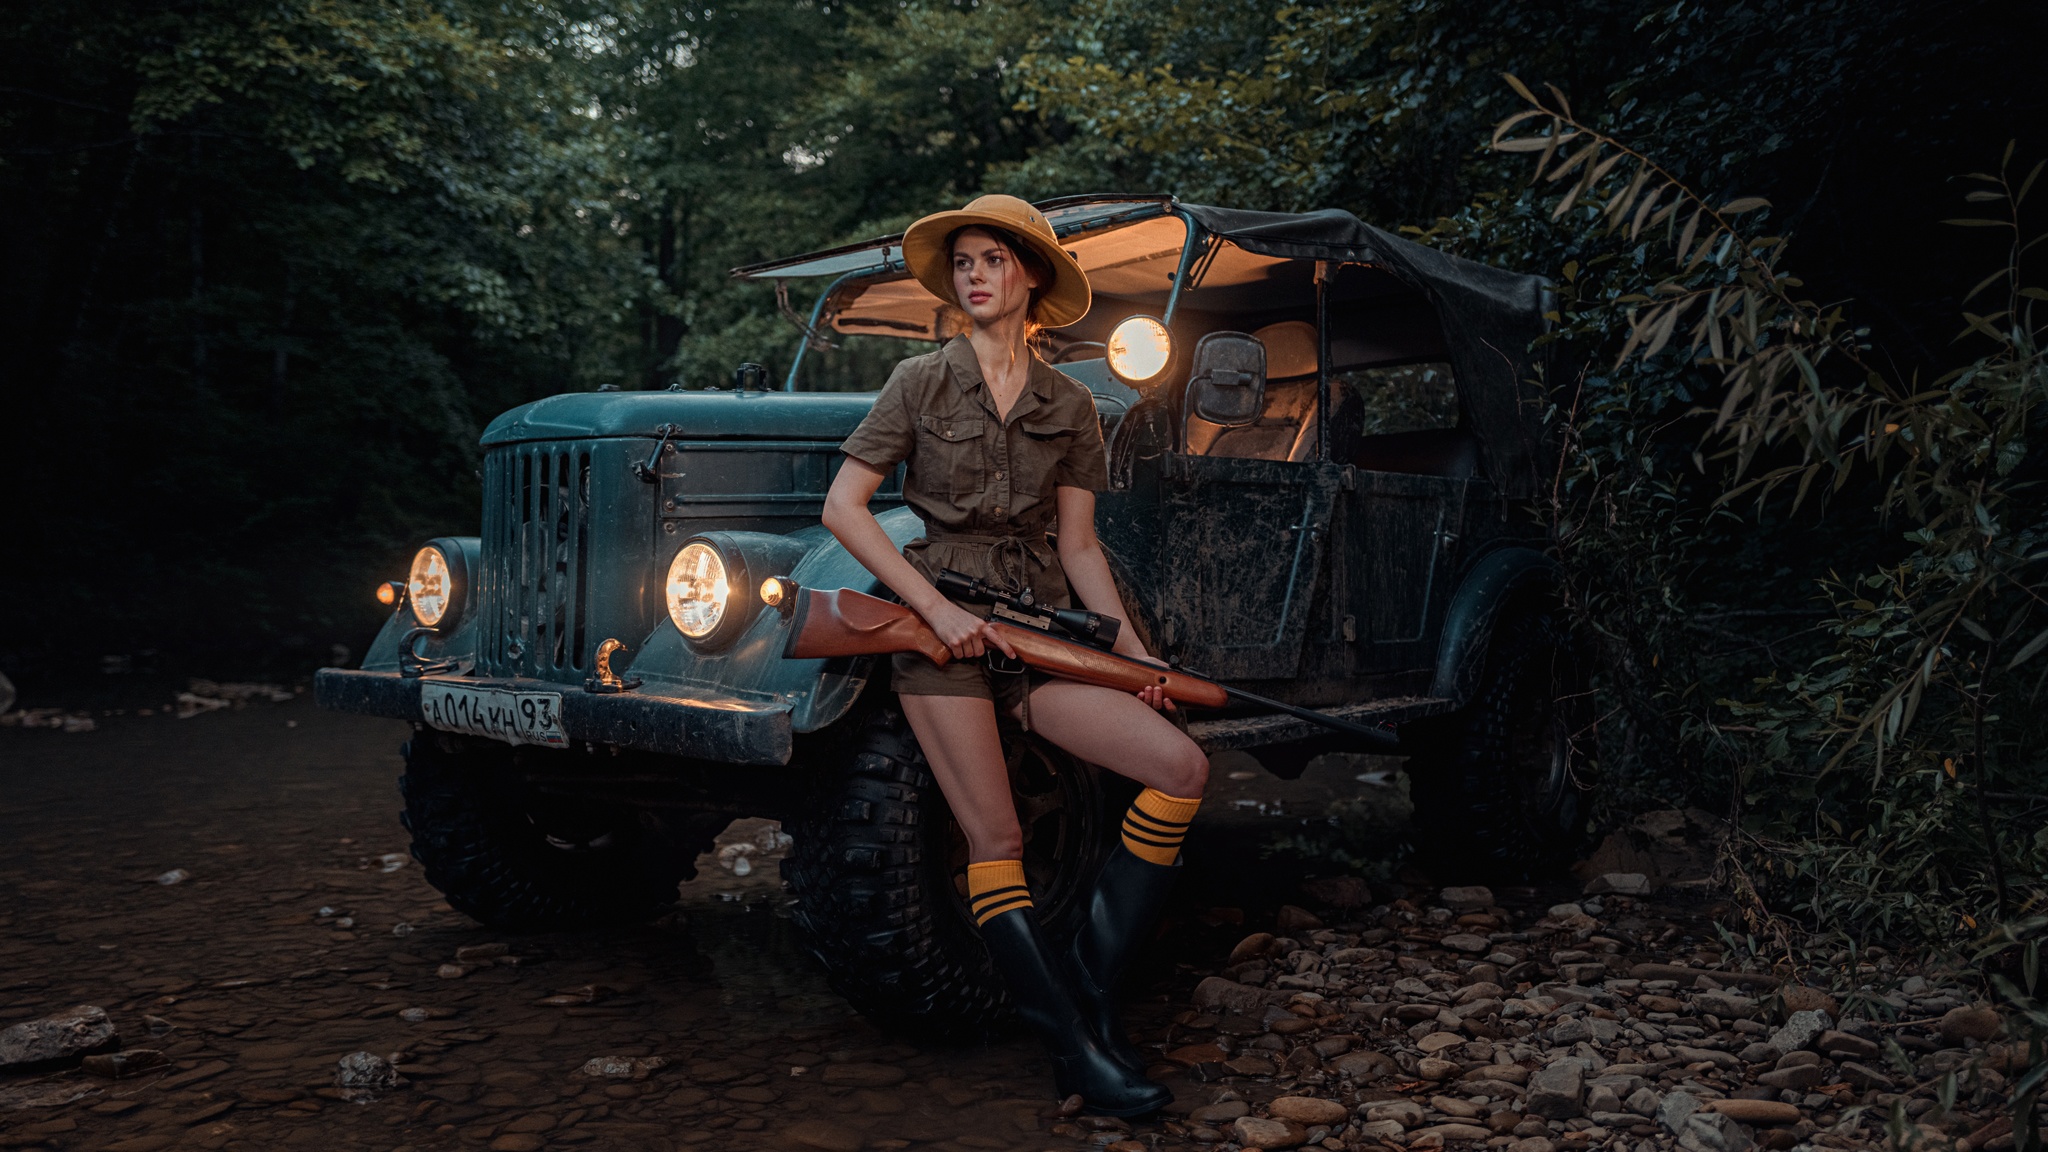 People 2048x1152 Georgy Chernyadyev women Viktoria Ageeva hat hunters sniper rifle car headlights forest boots 4x4 GAZ